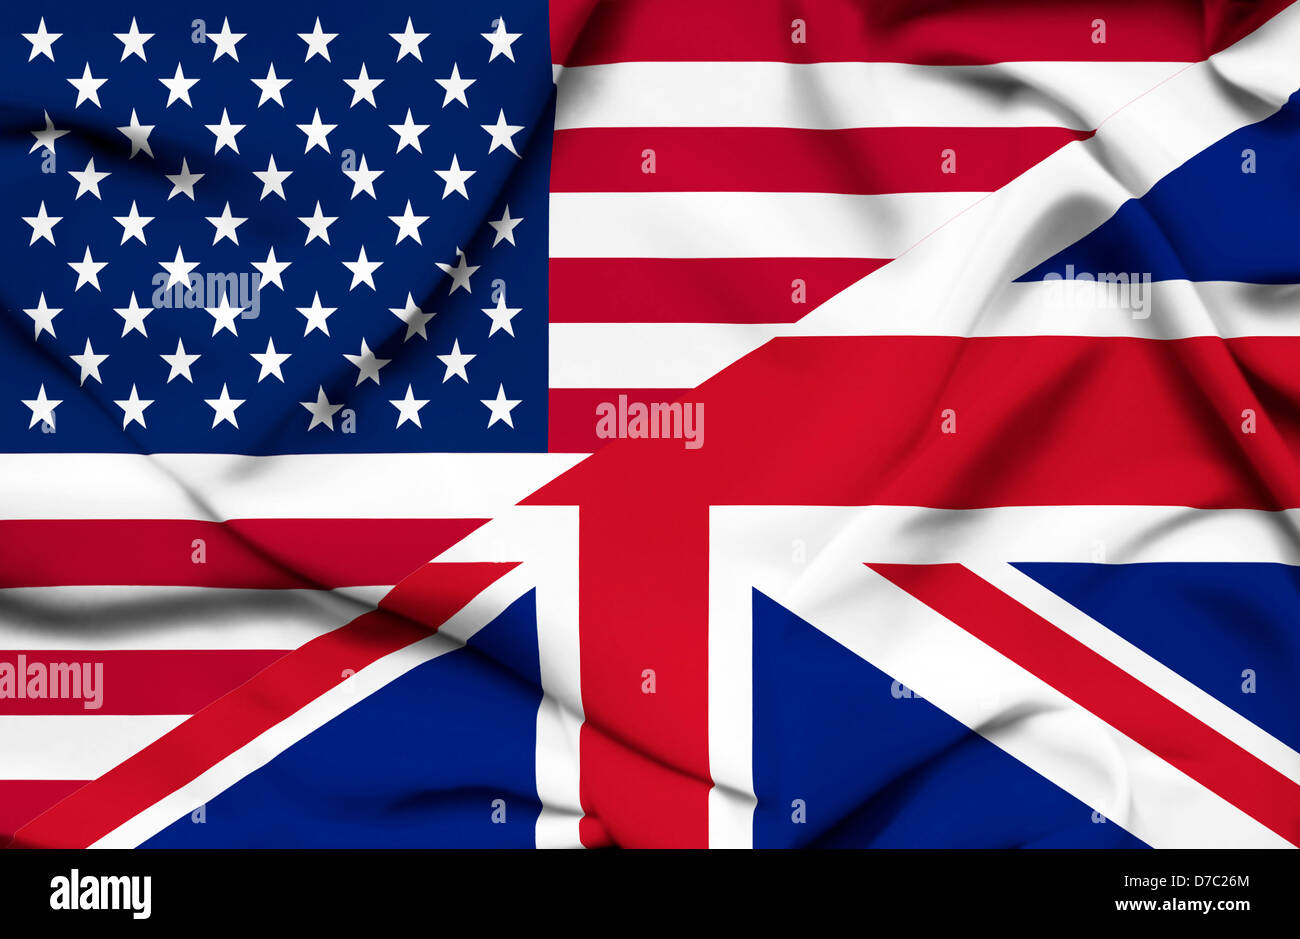 United States of America and United Kingdom waving flag Stock Photo